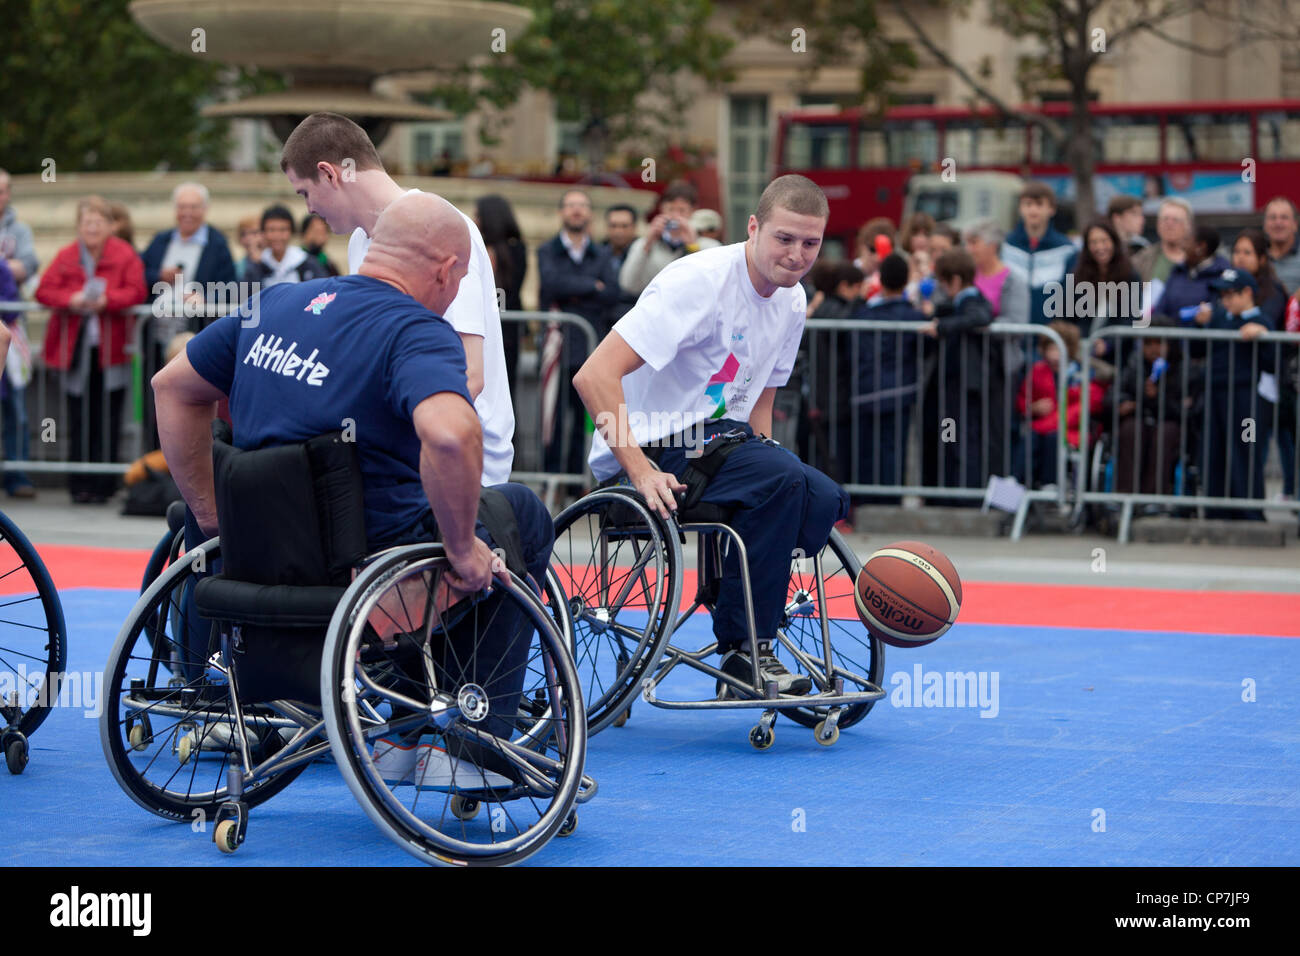 Les concurrents du basket-ball International Paralympic Day 2011, Trafalgar Square, Londres Banque D'Images